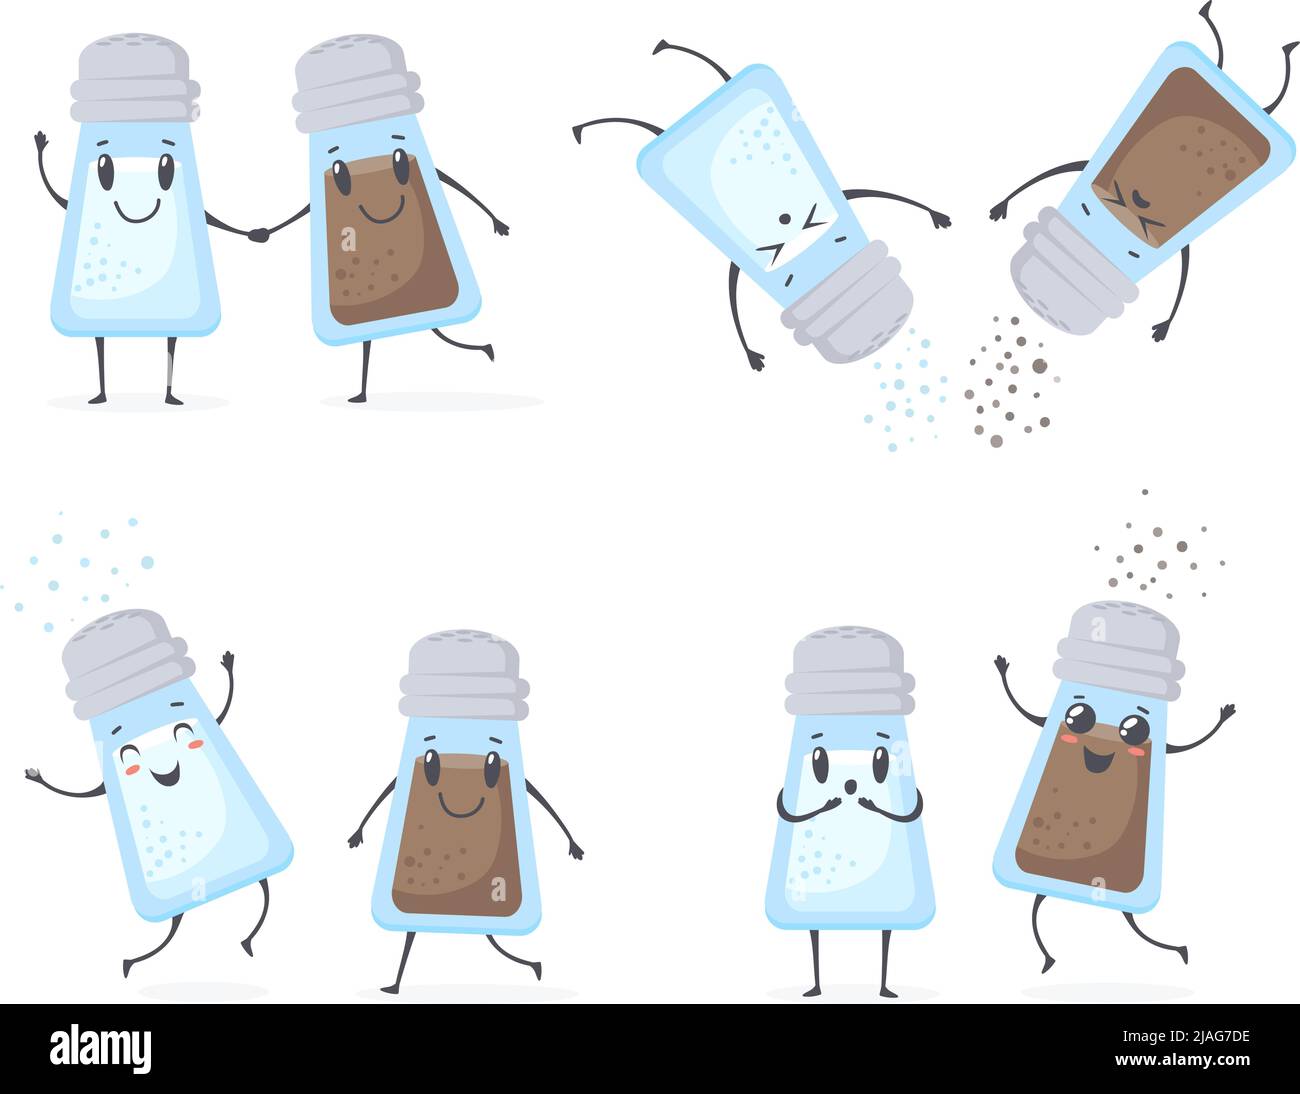 Vector Illustration Of Salt And Pepper Shaker Friendship In Doodle